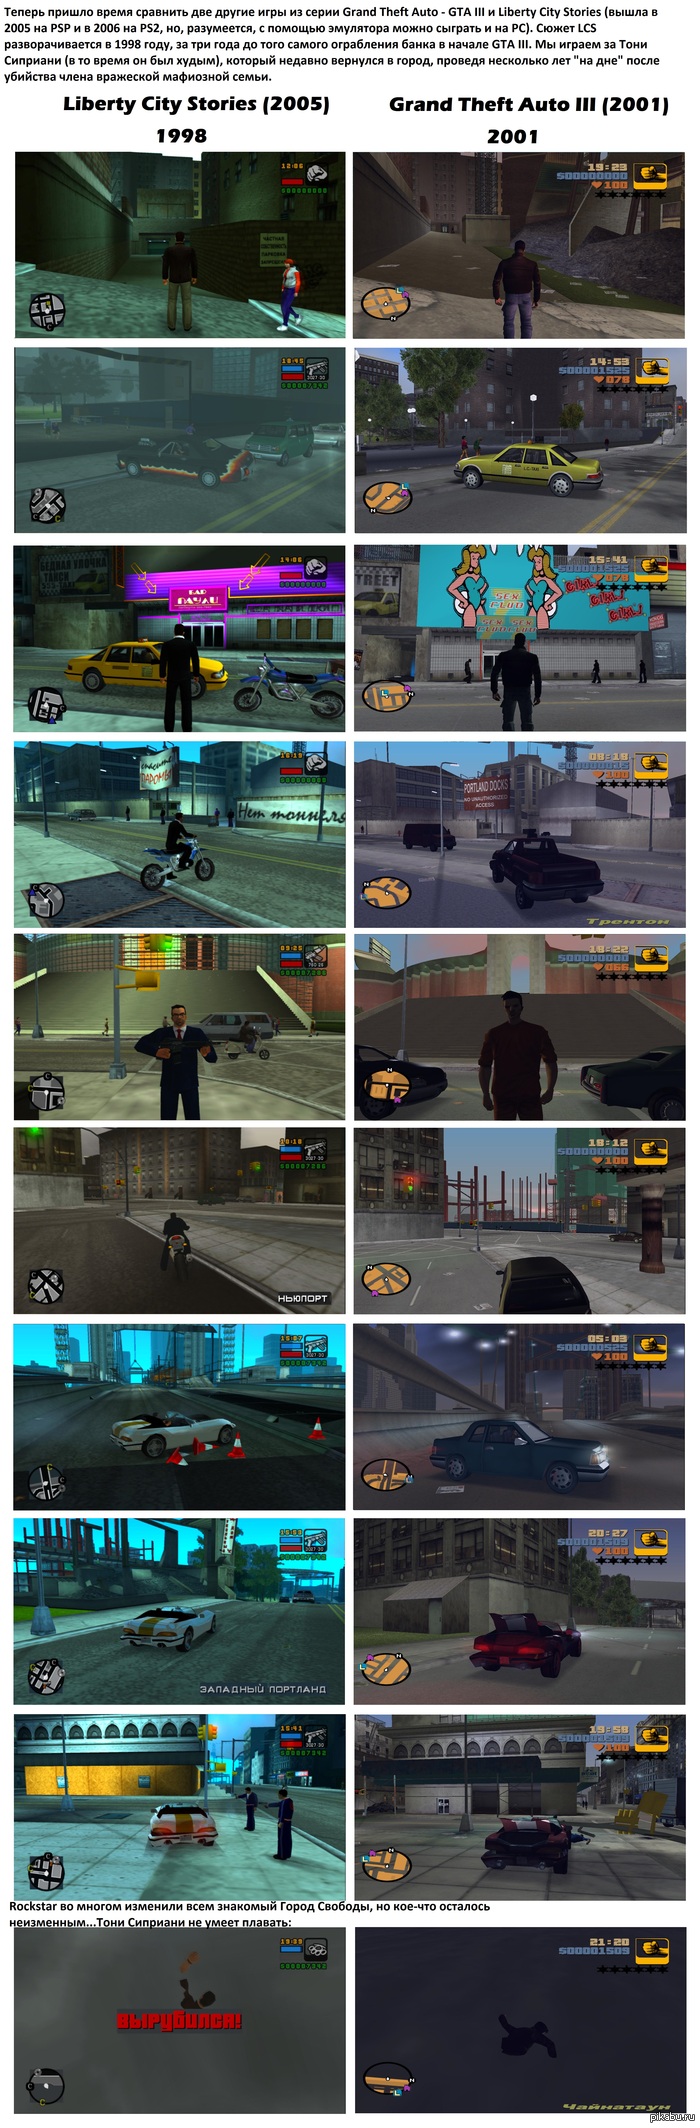 Grand Theft Auto III vs. Liberty City Stories Vice City vs. Vice City Stories: <a href="http://pikabu.ru/story/grand_theft_auto_vice_city_vs_vice_city_stories_1433347">http://pikabu.ru/story/_1433347</a>